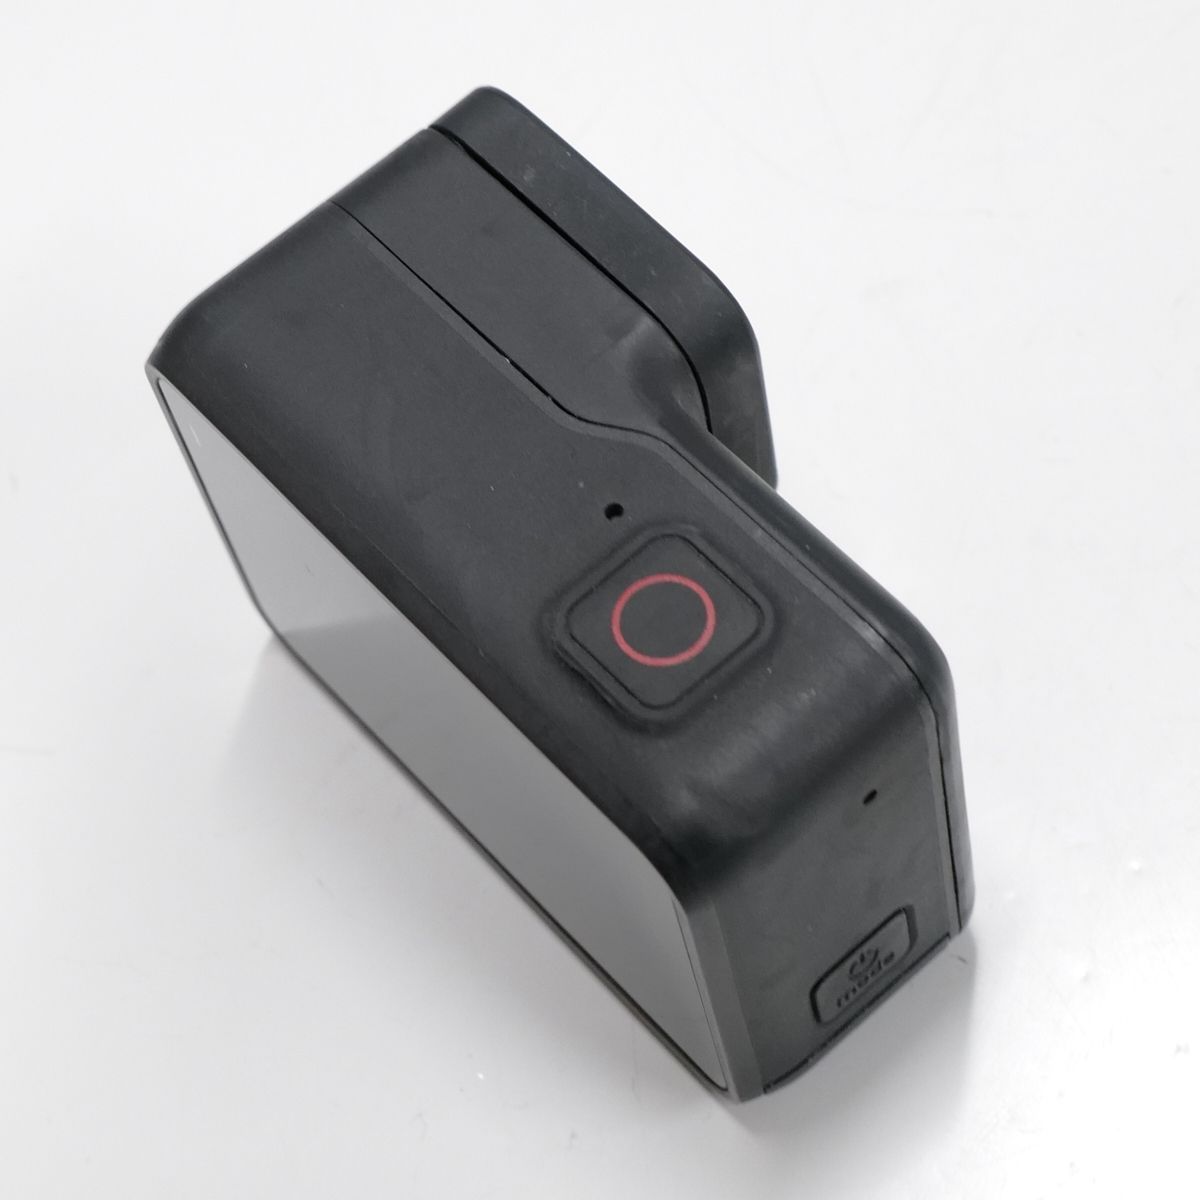 GoPro HERO7 Black ウェアラブルカメラ USED美品 本体+バッテリー 4K動画 CHDHX-701-FW 完動品 中古 CE4029  - メルカリ